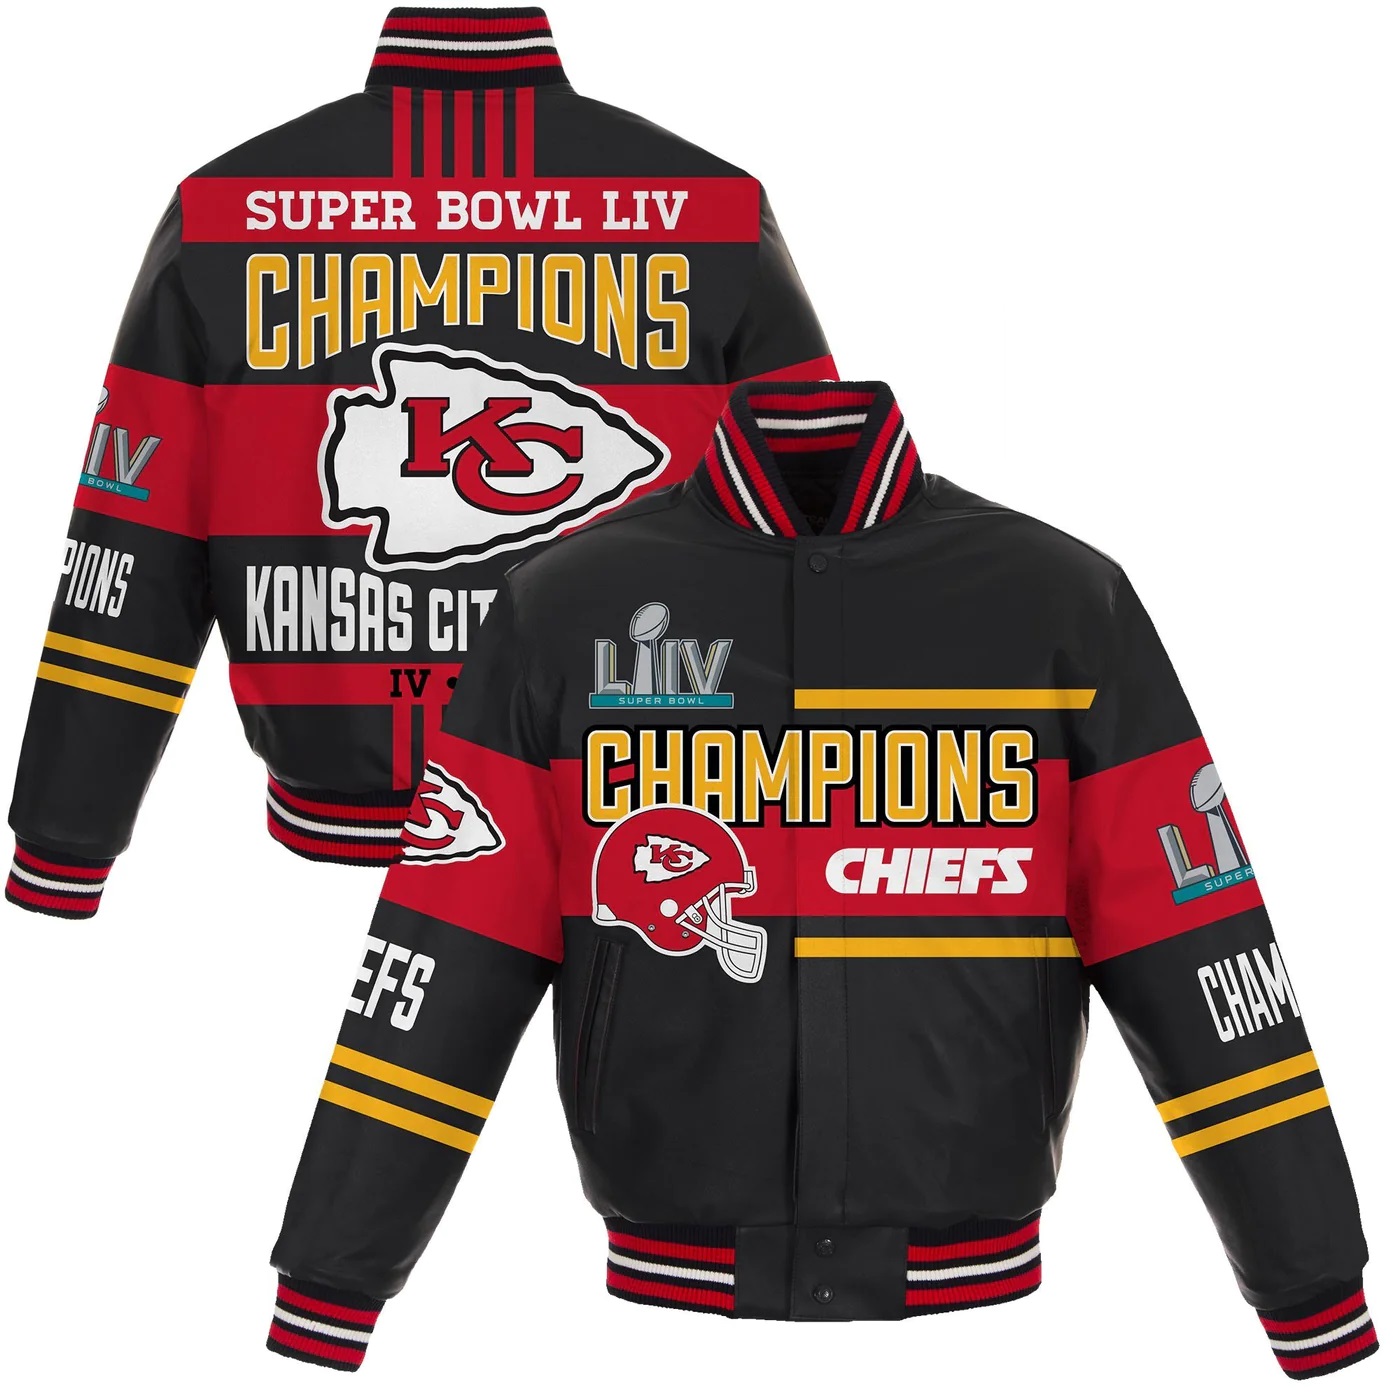 Kansas City Chiefs Super Bowl LIV Champions Leather Jacket